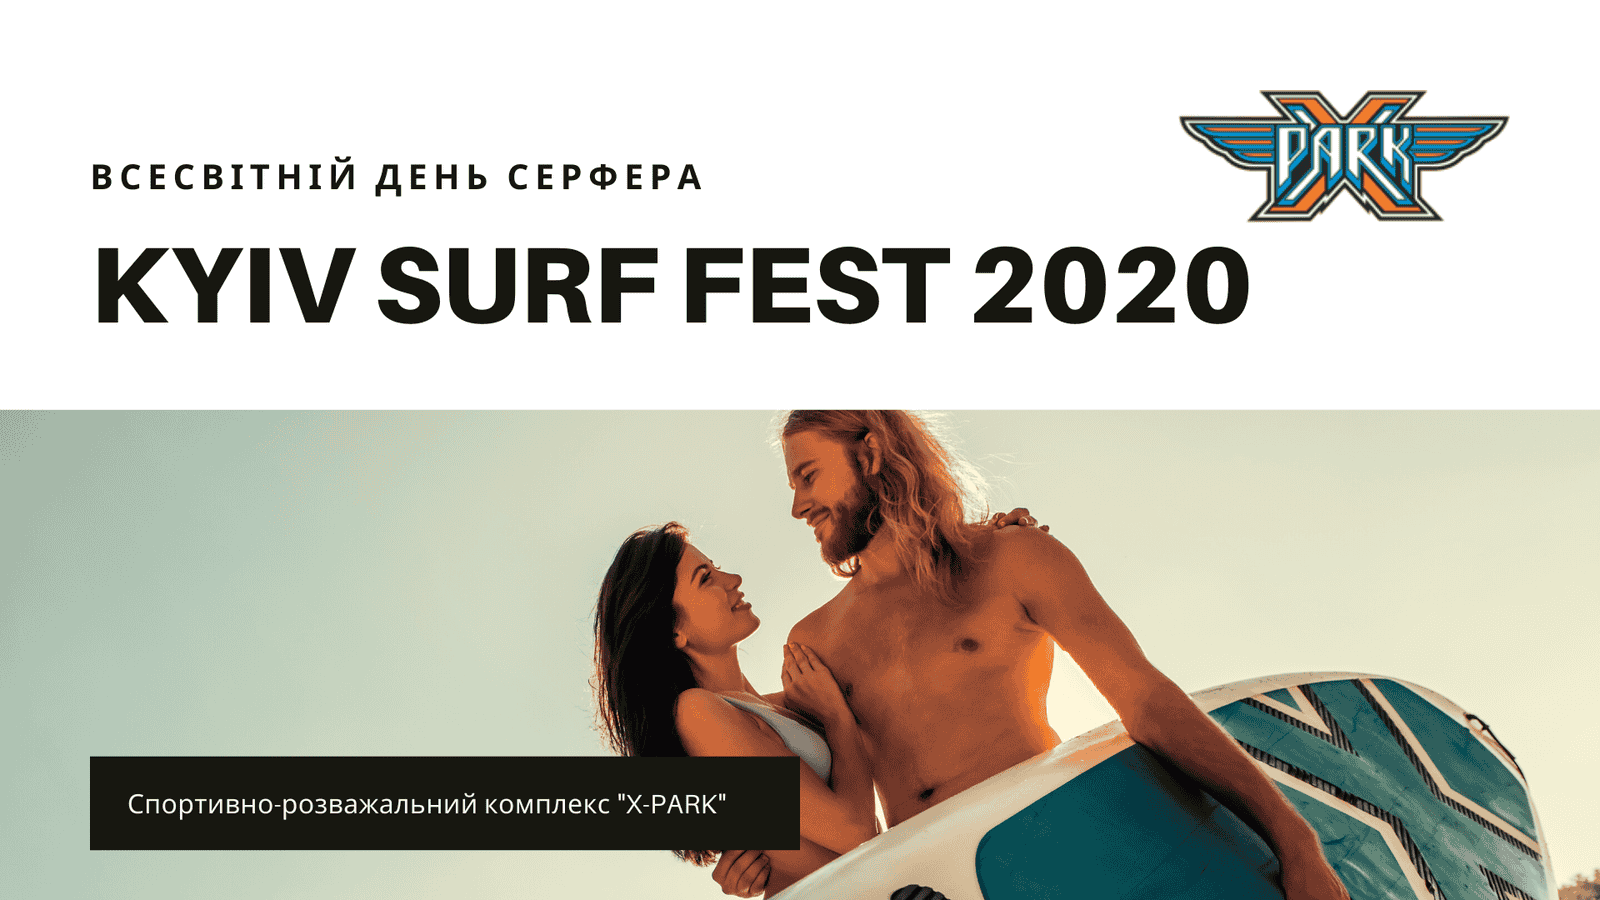 Kyiv Surf Fest 2020